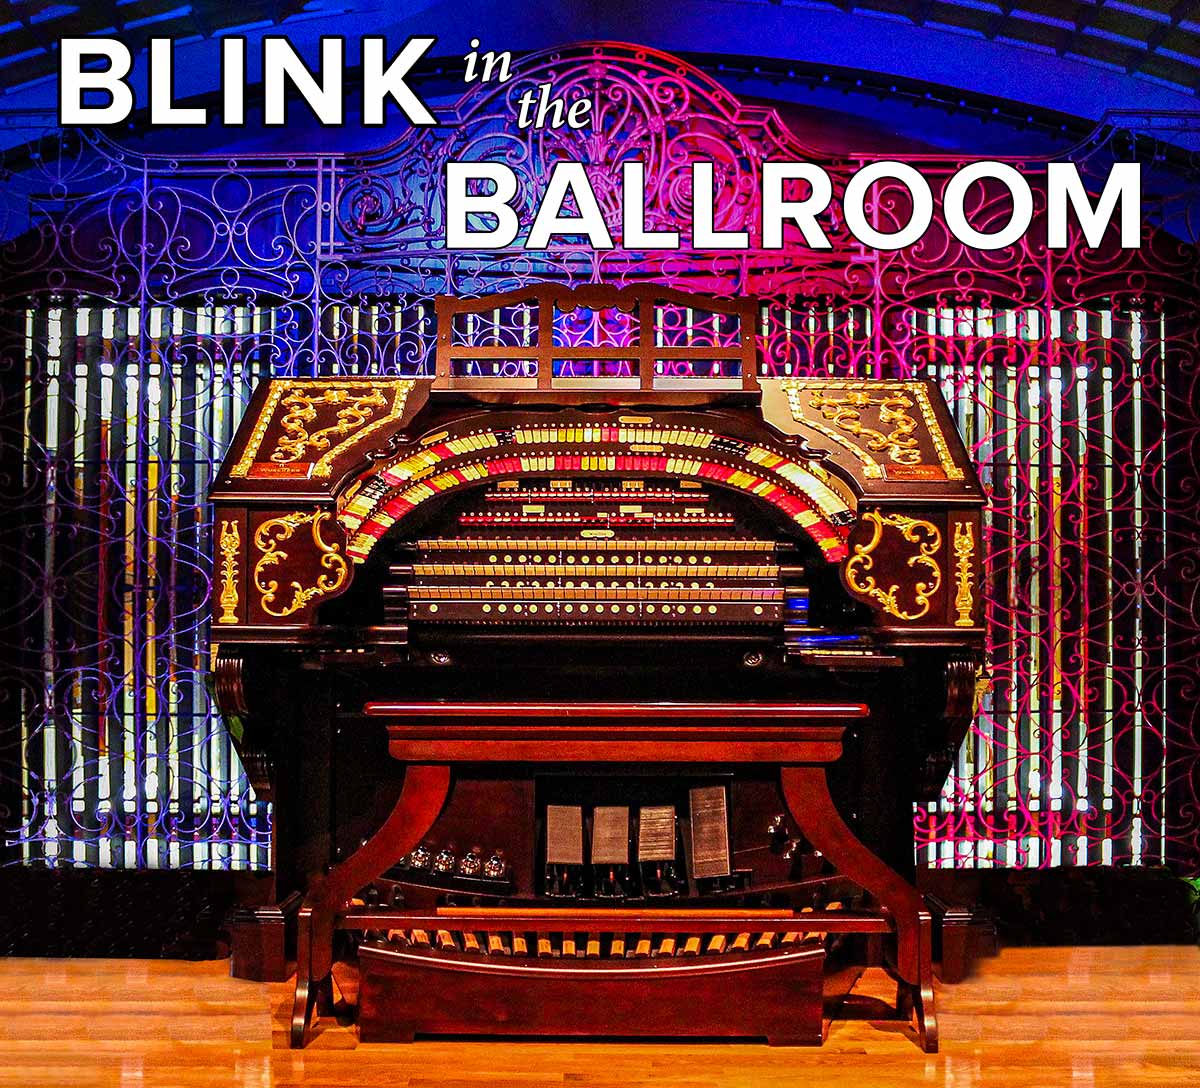 Blink in the Ballroom, Music Hall, October 13 thru 16, 2022, 7-10pm each night.